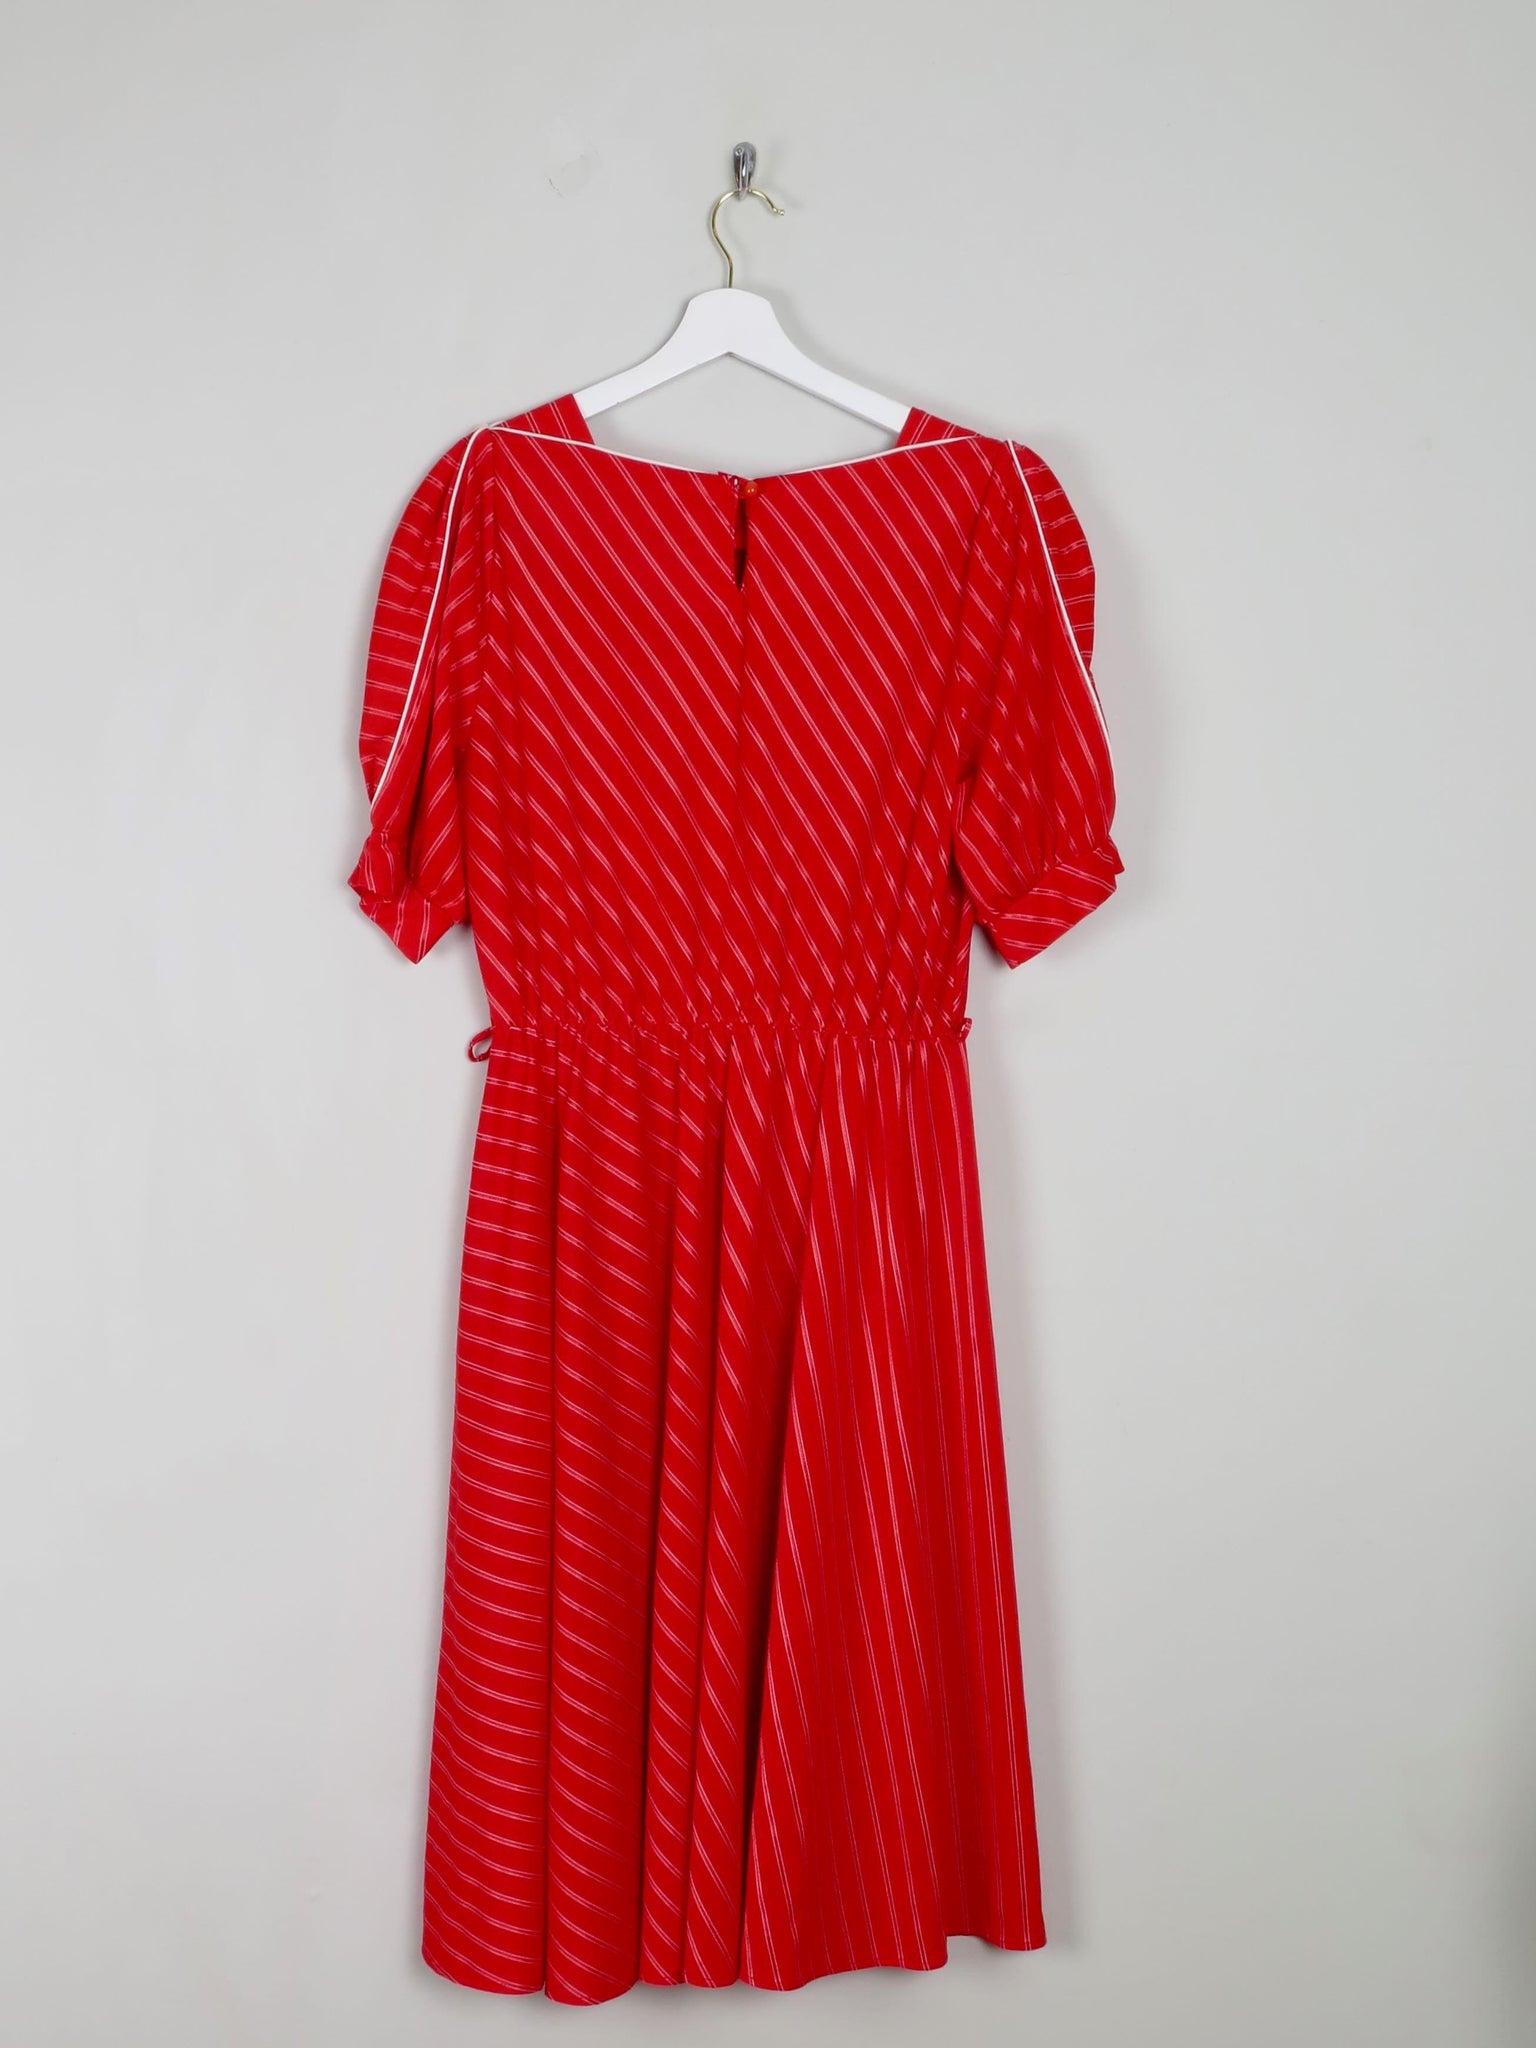 Red Striped 1970s Vintage Dress S/M - The Harlequin